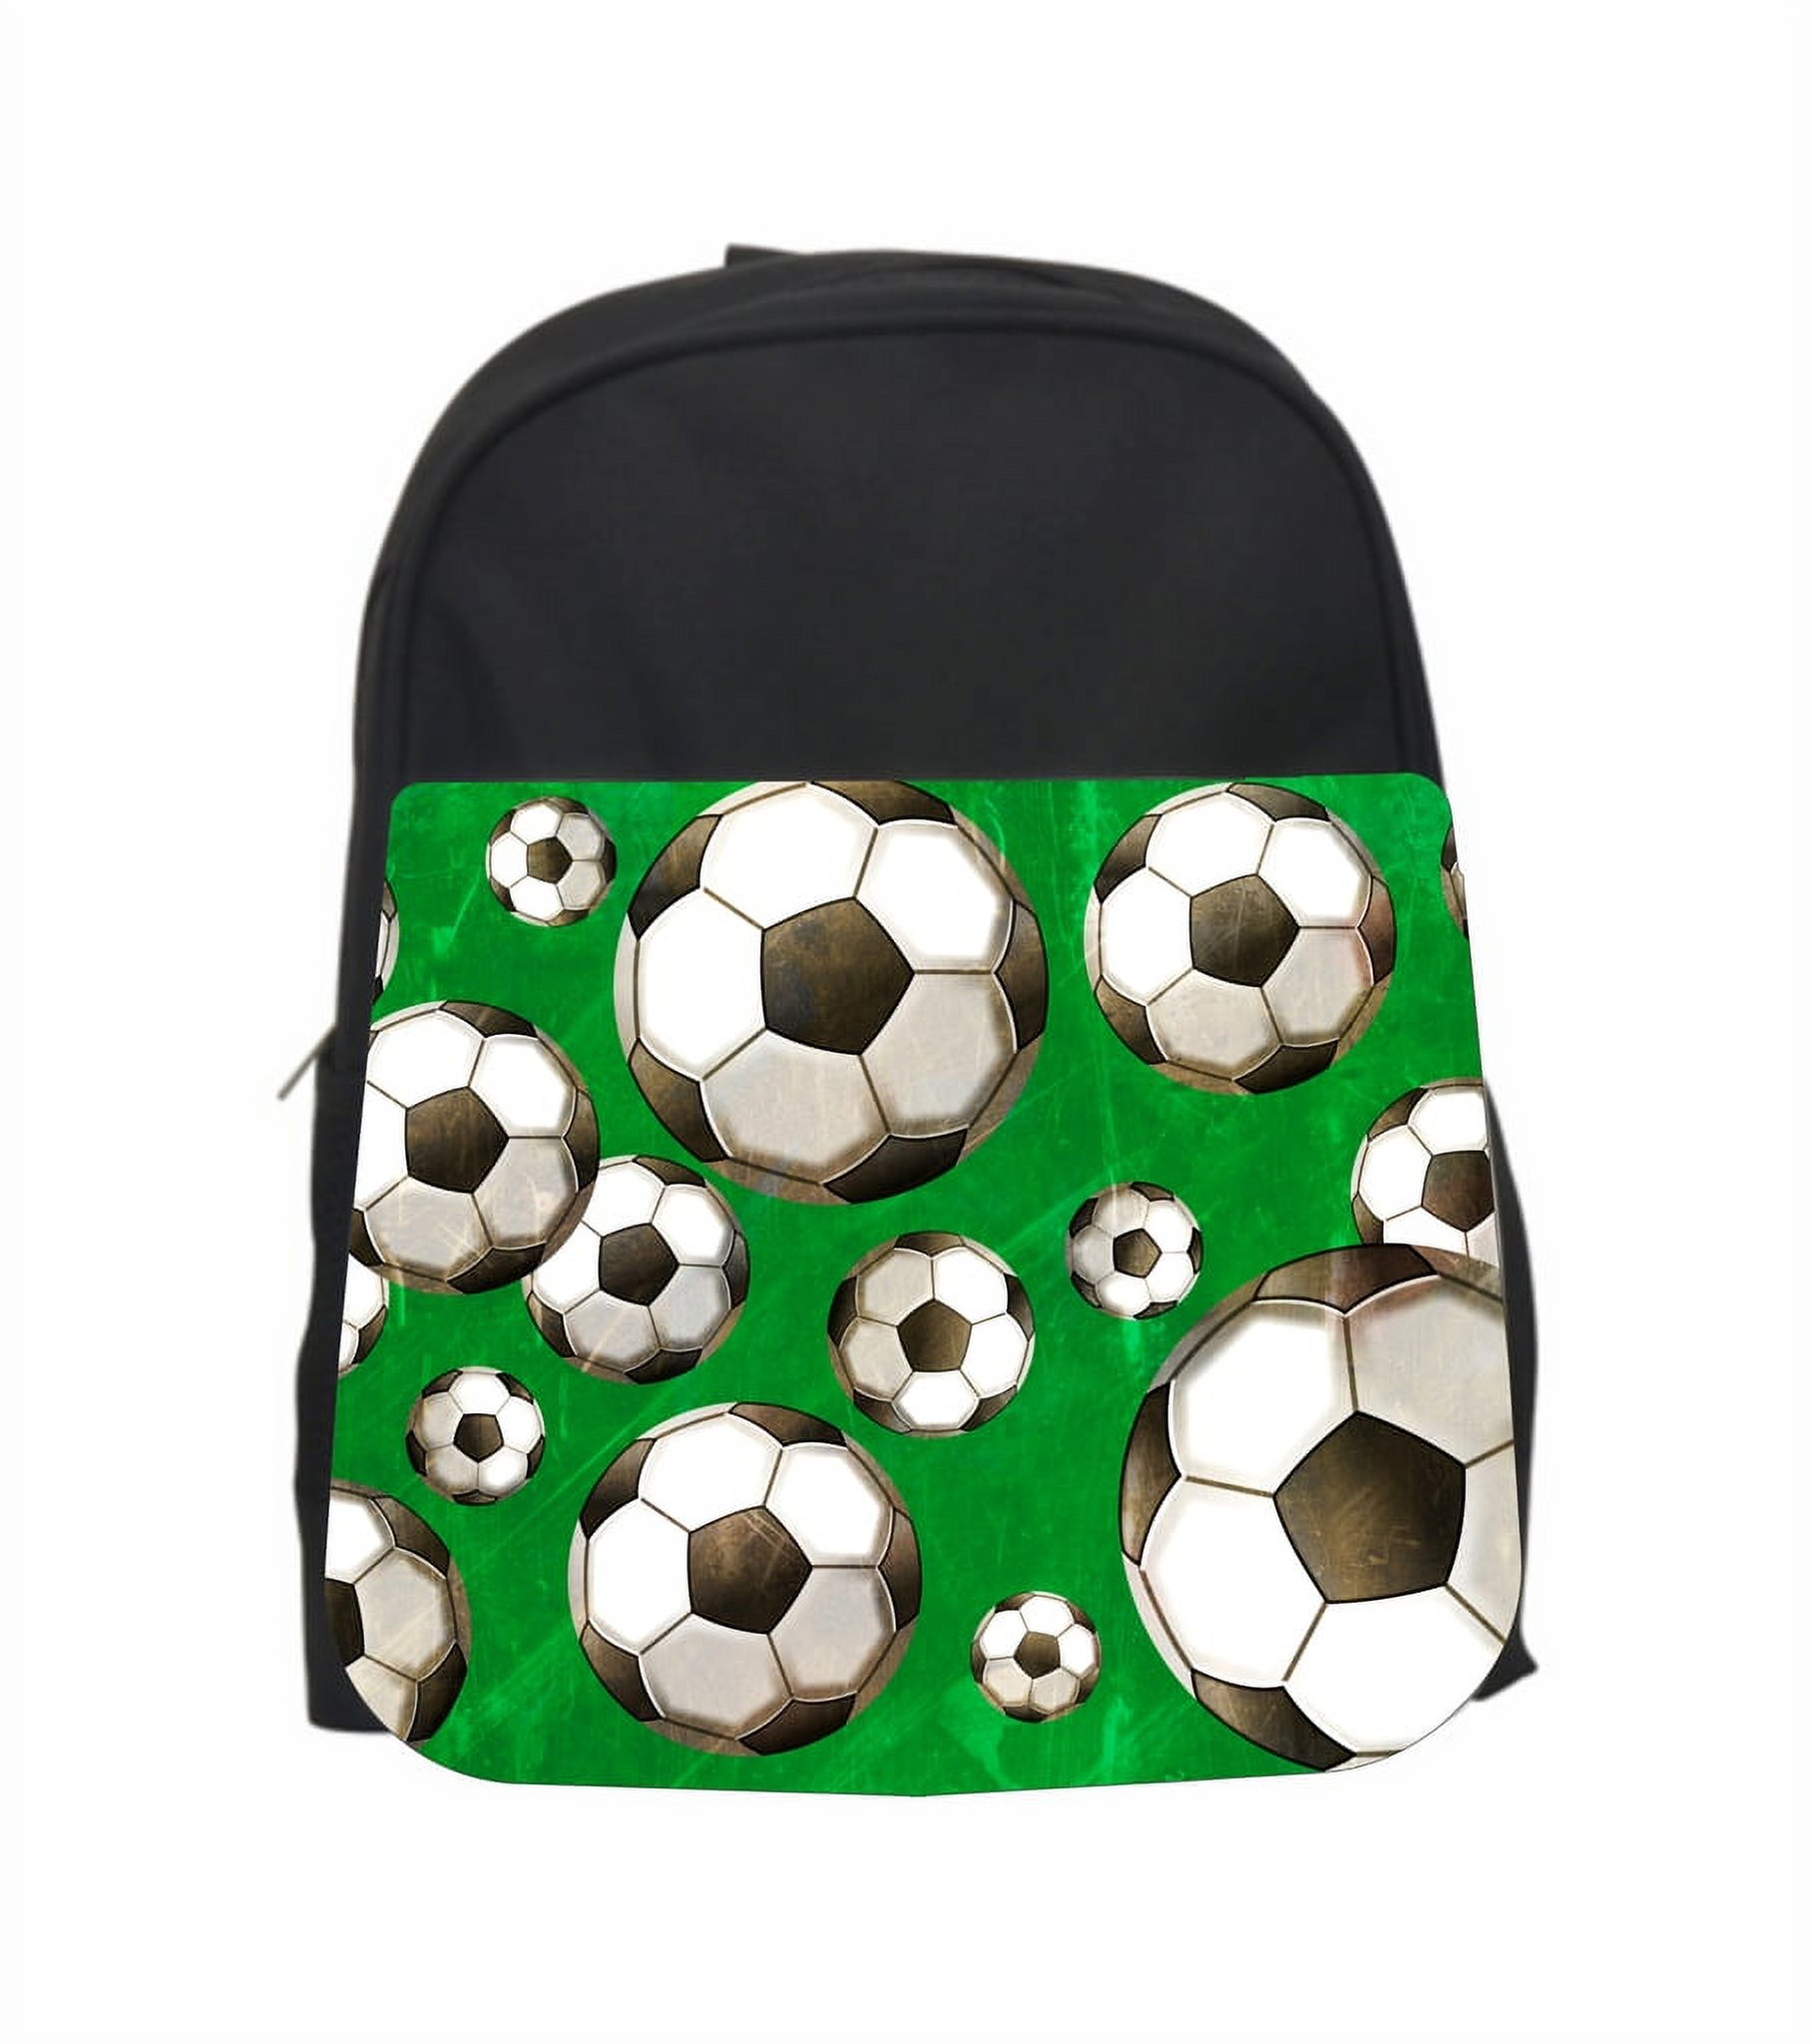 Soccer Balls On Green 13" x 10" Black Preschool Toddler Children's Backpack & Pencil Bag Set - image 1 of 2